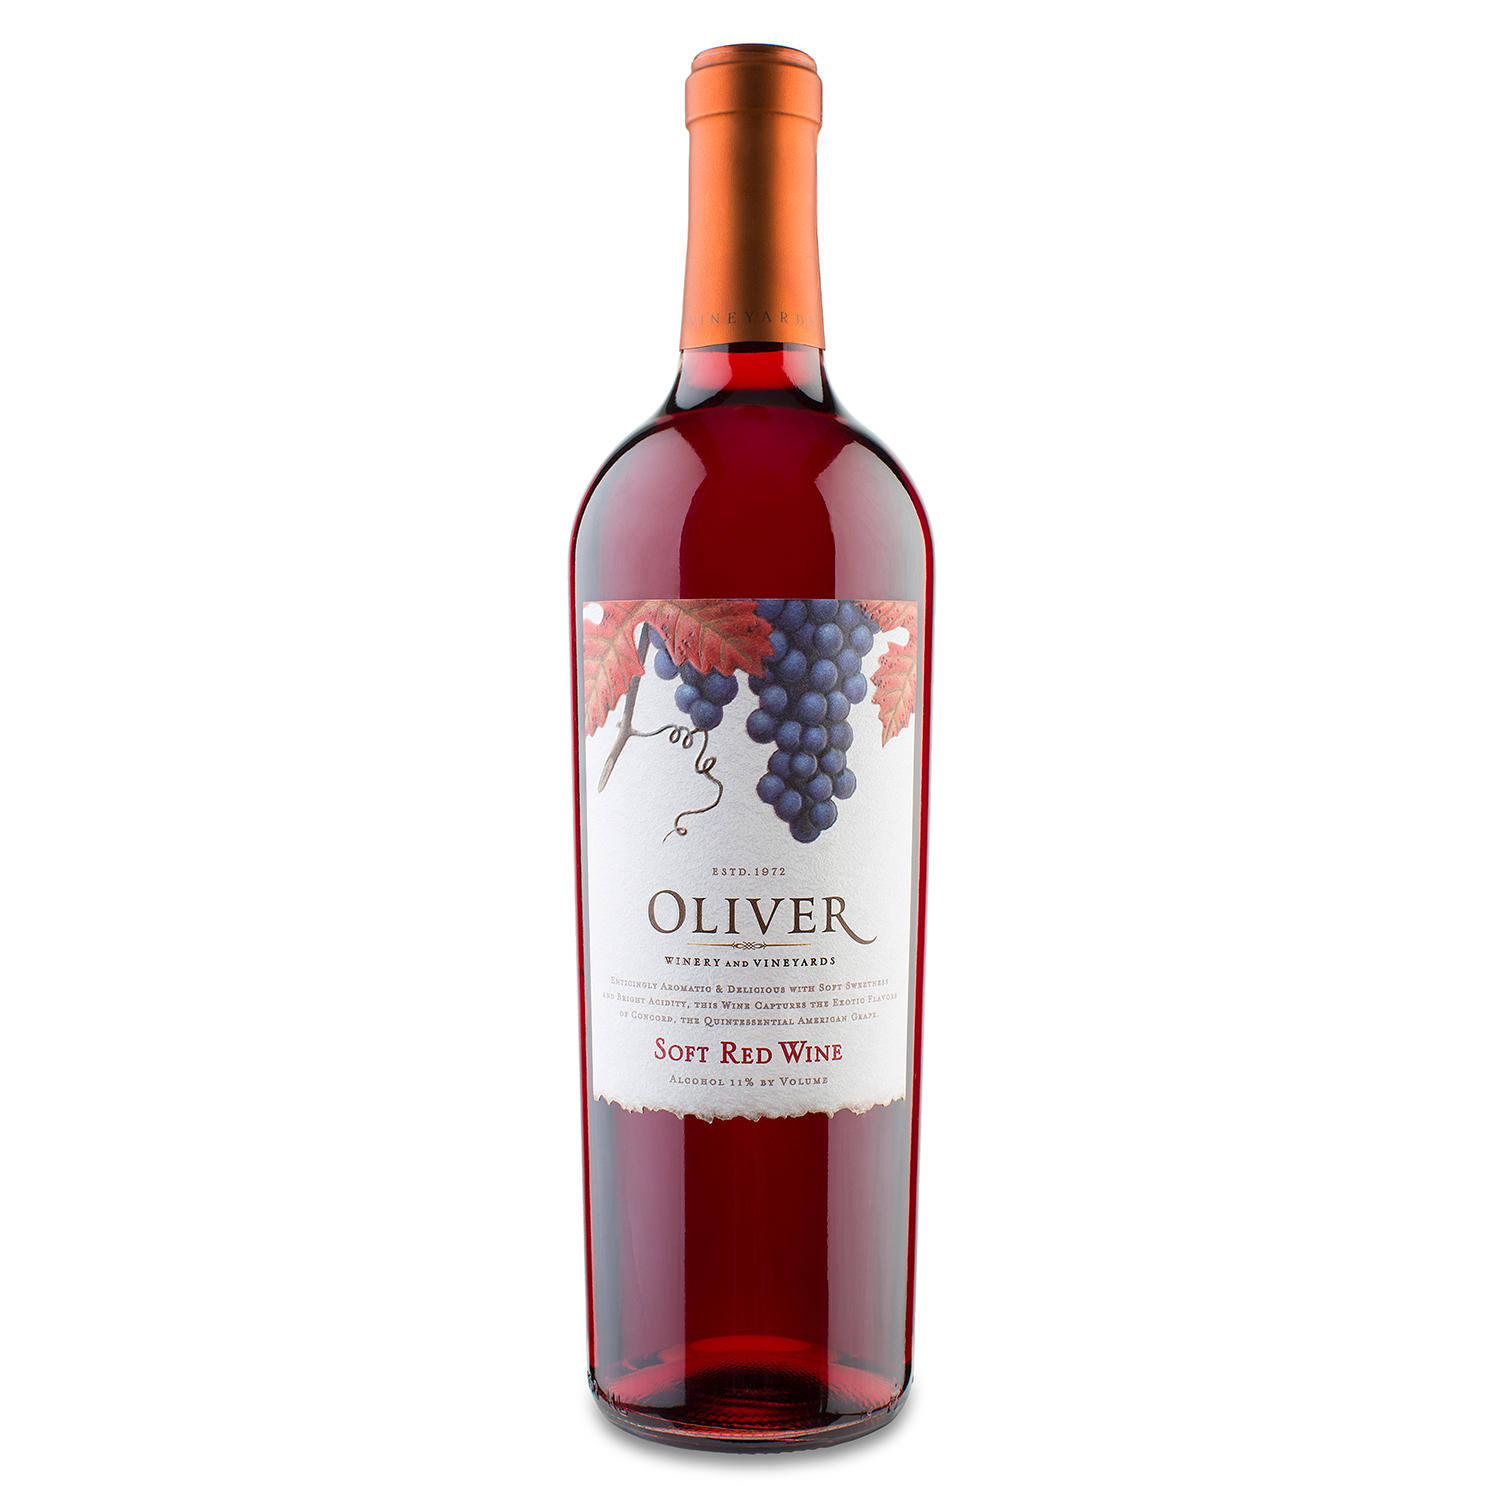 Oliver Soft Red Wine - 750ml